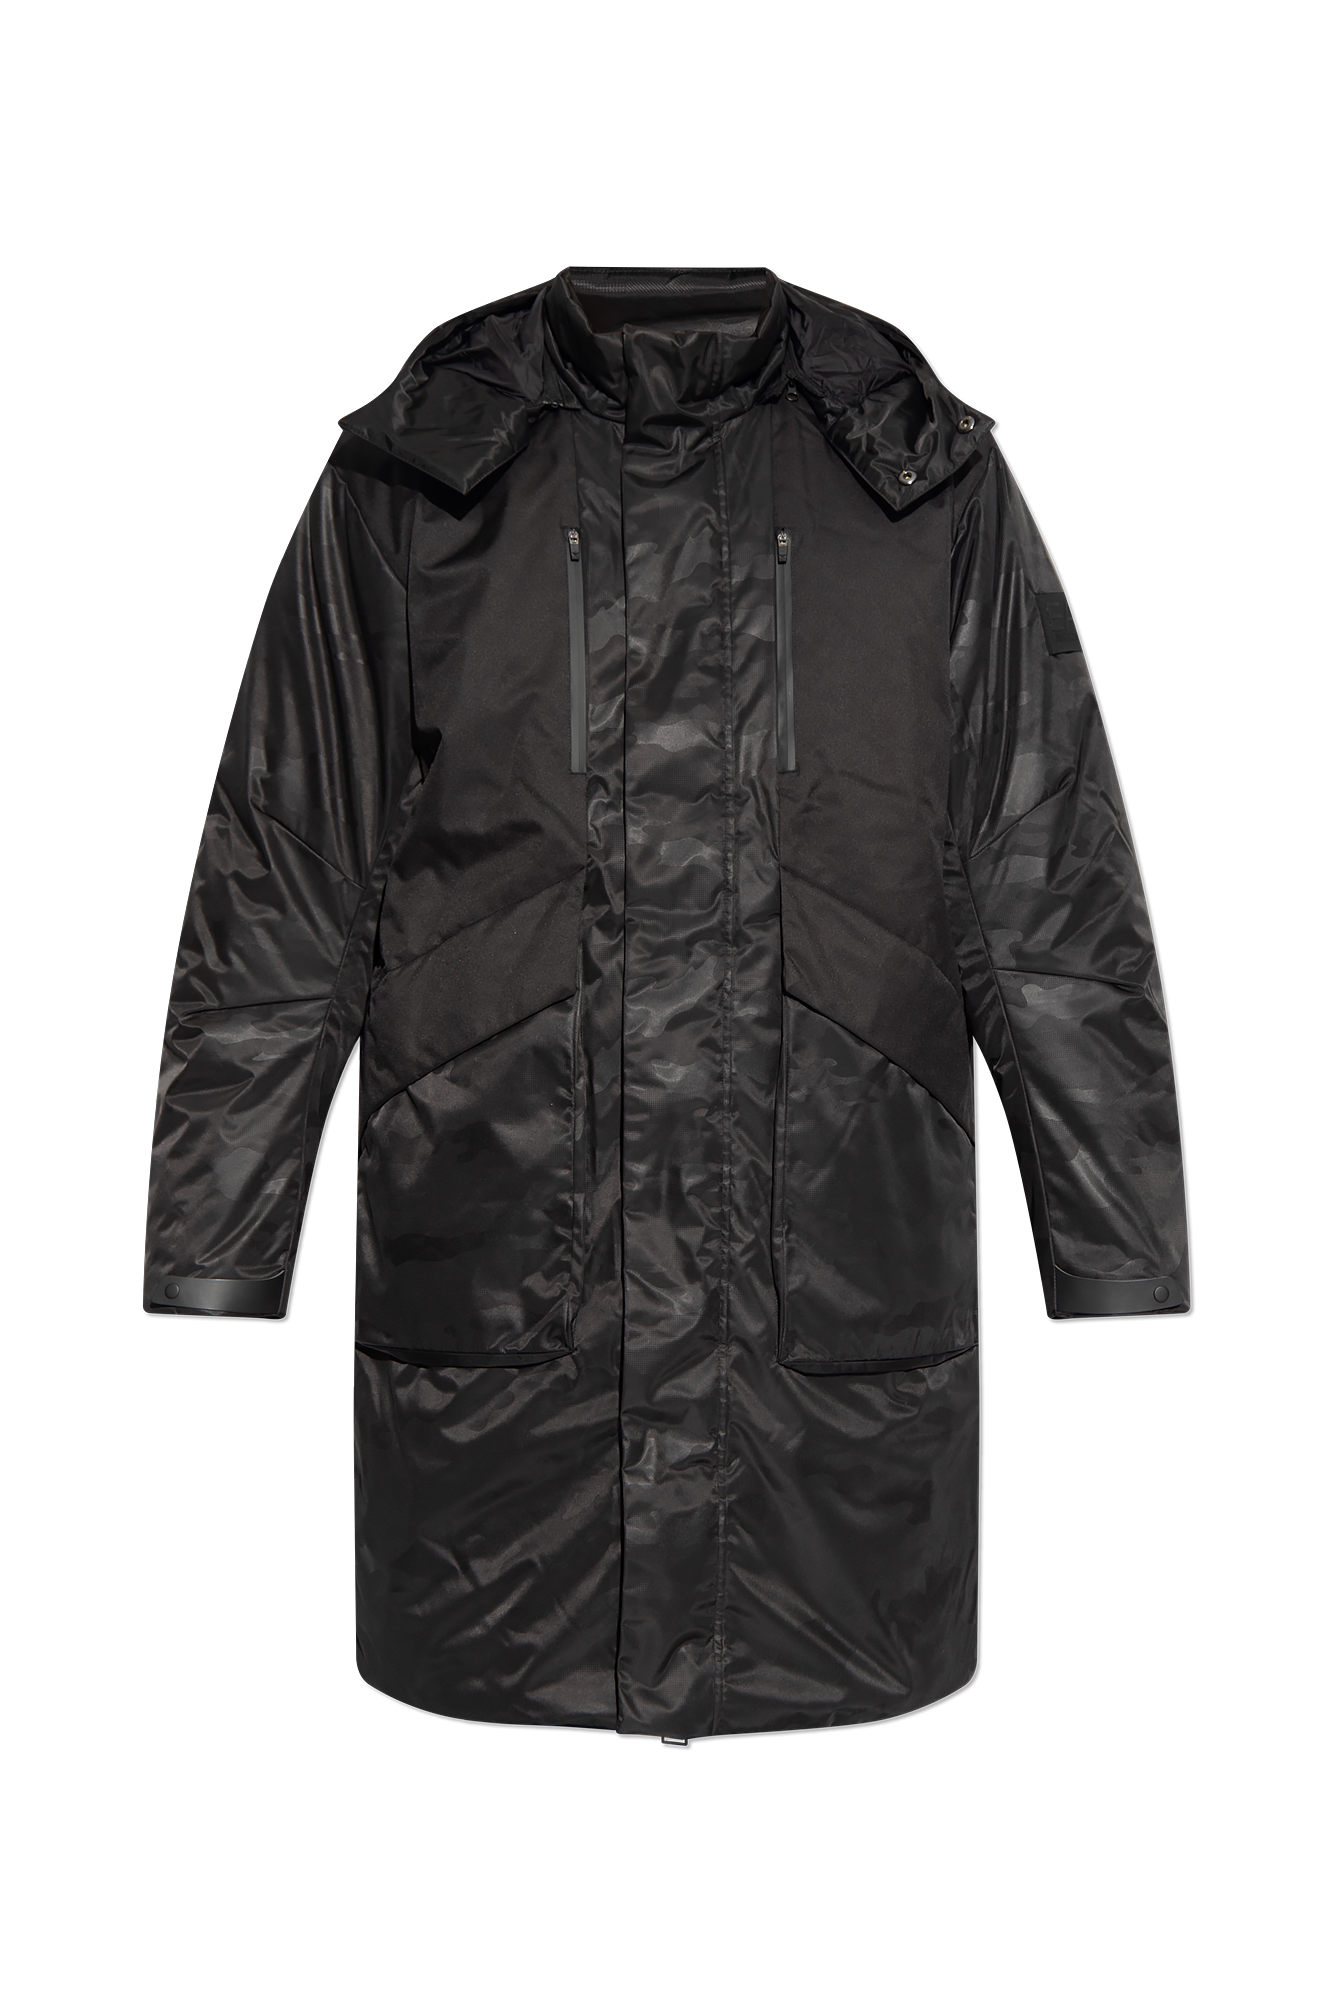 EA7 Emporio Armani Hooded jacket | Men's Clothing | Vitkac